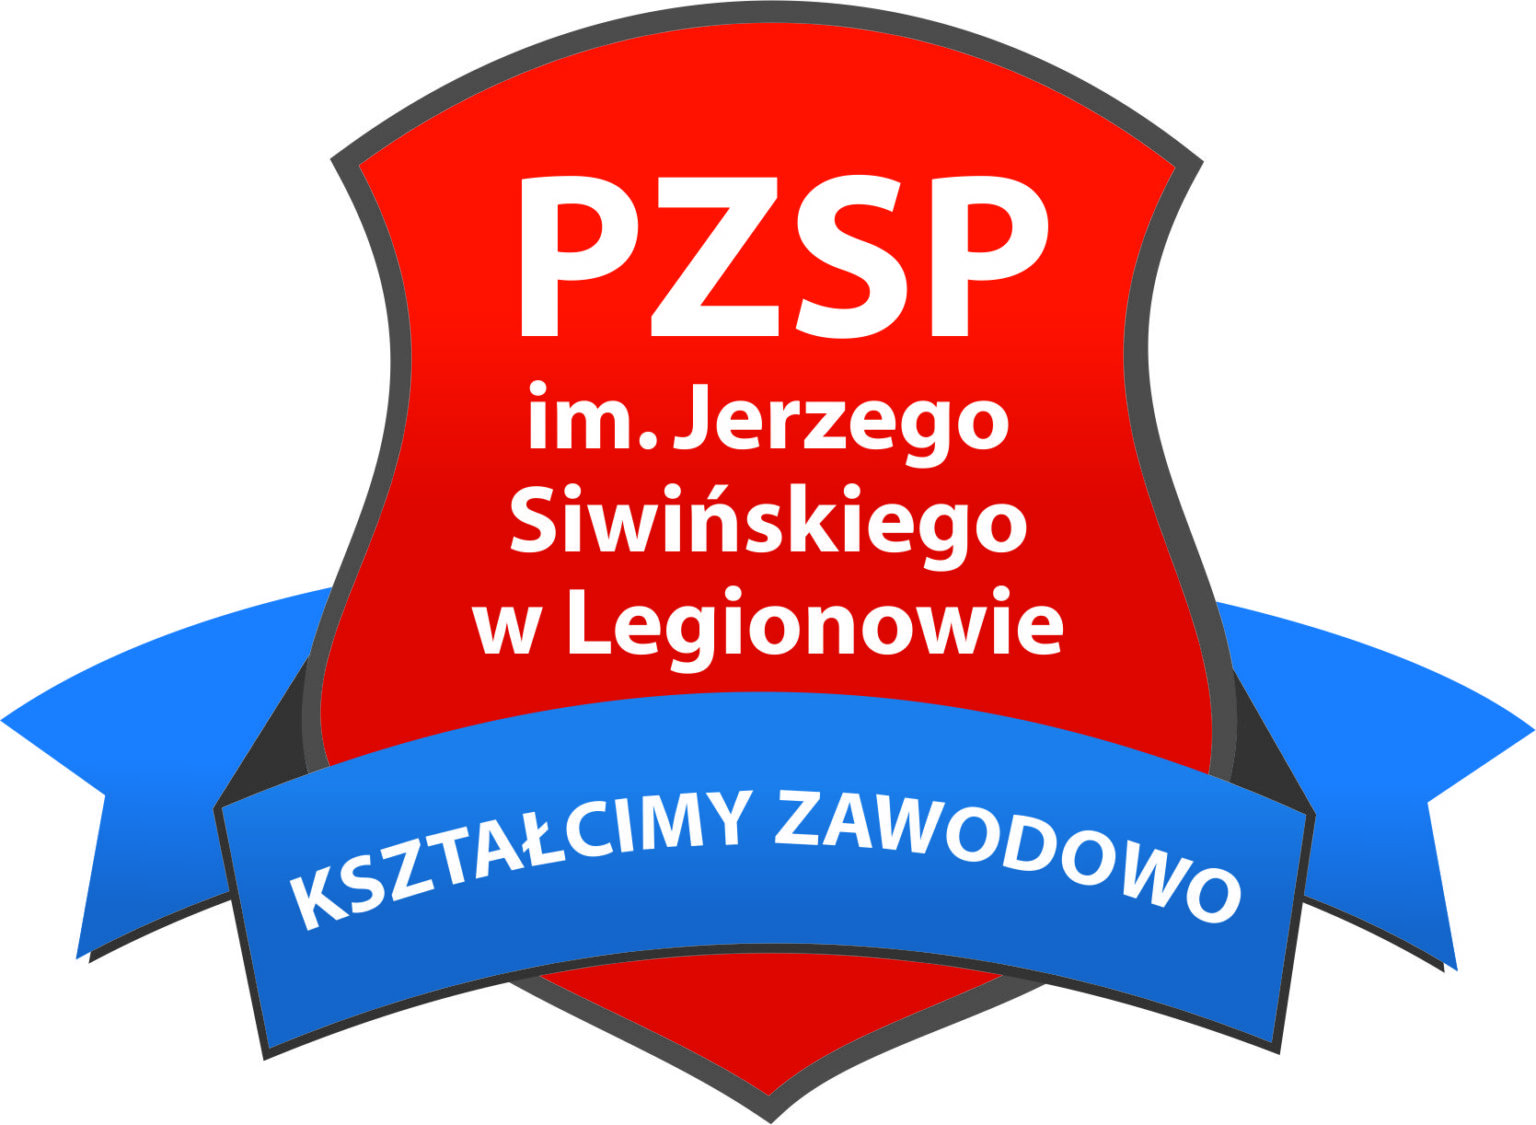 PZSP logo